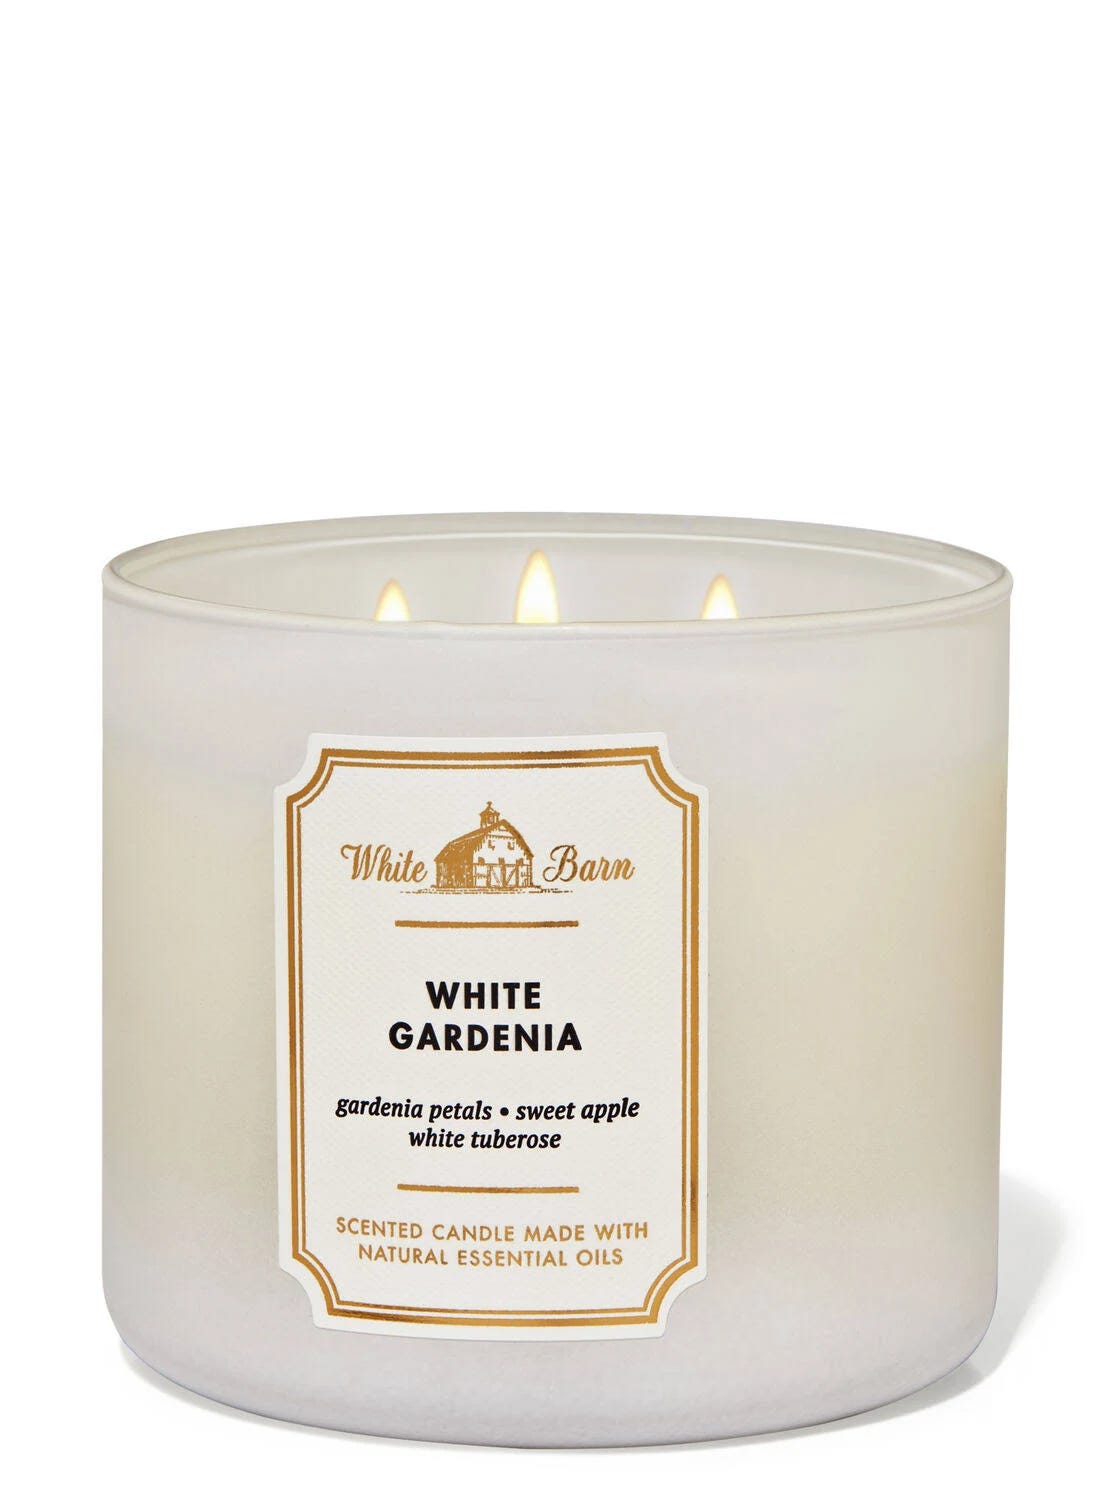 White Barn White Gardenia 3-Wick Candle | Image